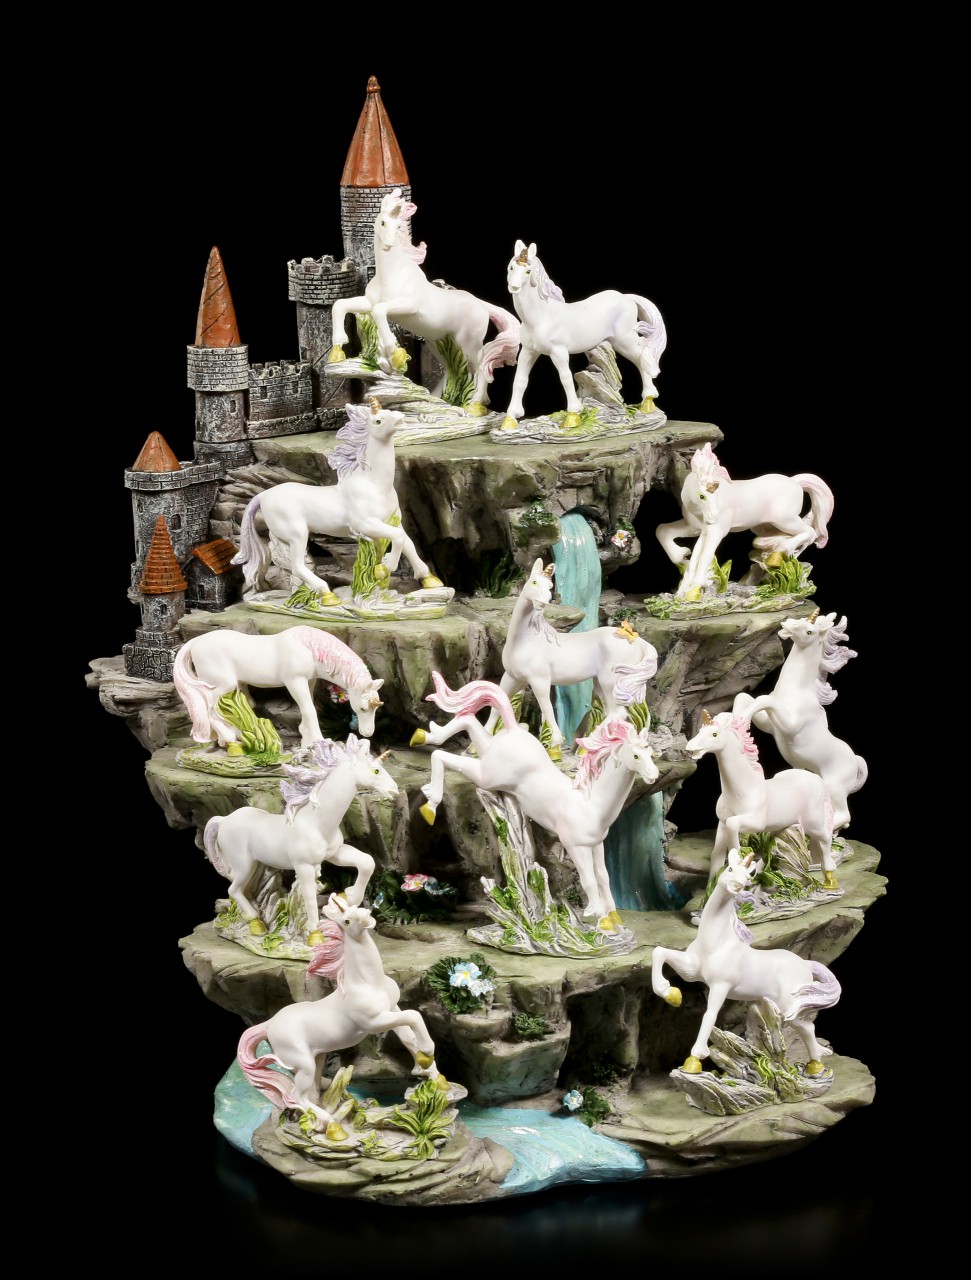 Unicorn Figurines with Display - Set of 12